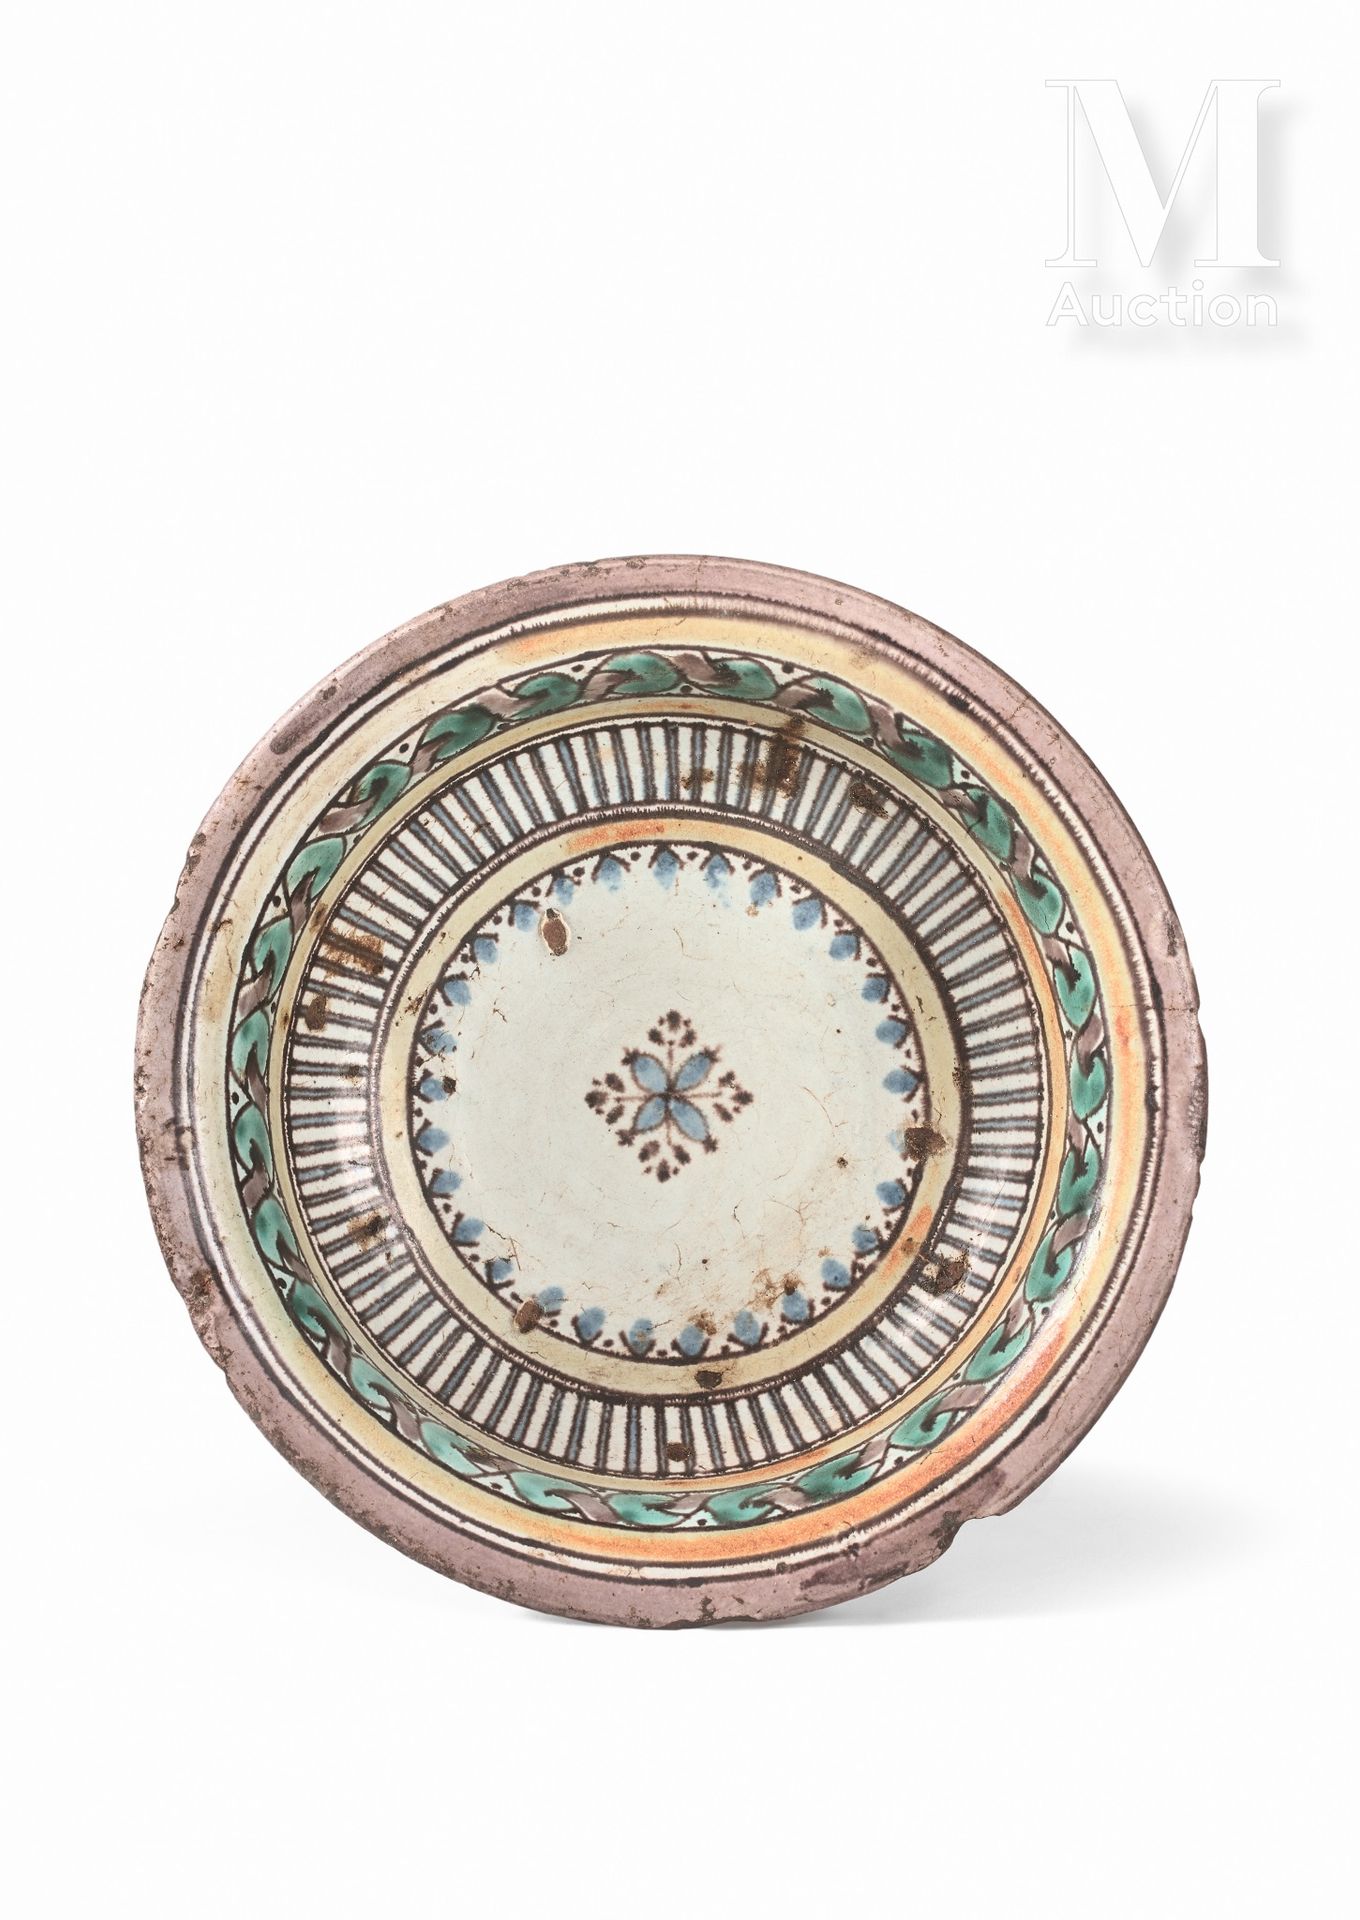 Tobsil de Fès 摩洛哥，18世纪

一个基座上的陶瓷盘，装饰有多色珐琅，在白色的滑液中涂有透明釉。一个四瓣的小花装饰着中心，两侧覆盖着条纹，然后是一&hellip;